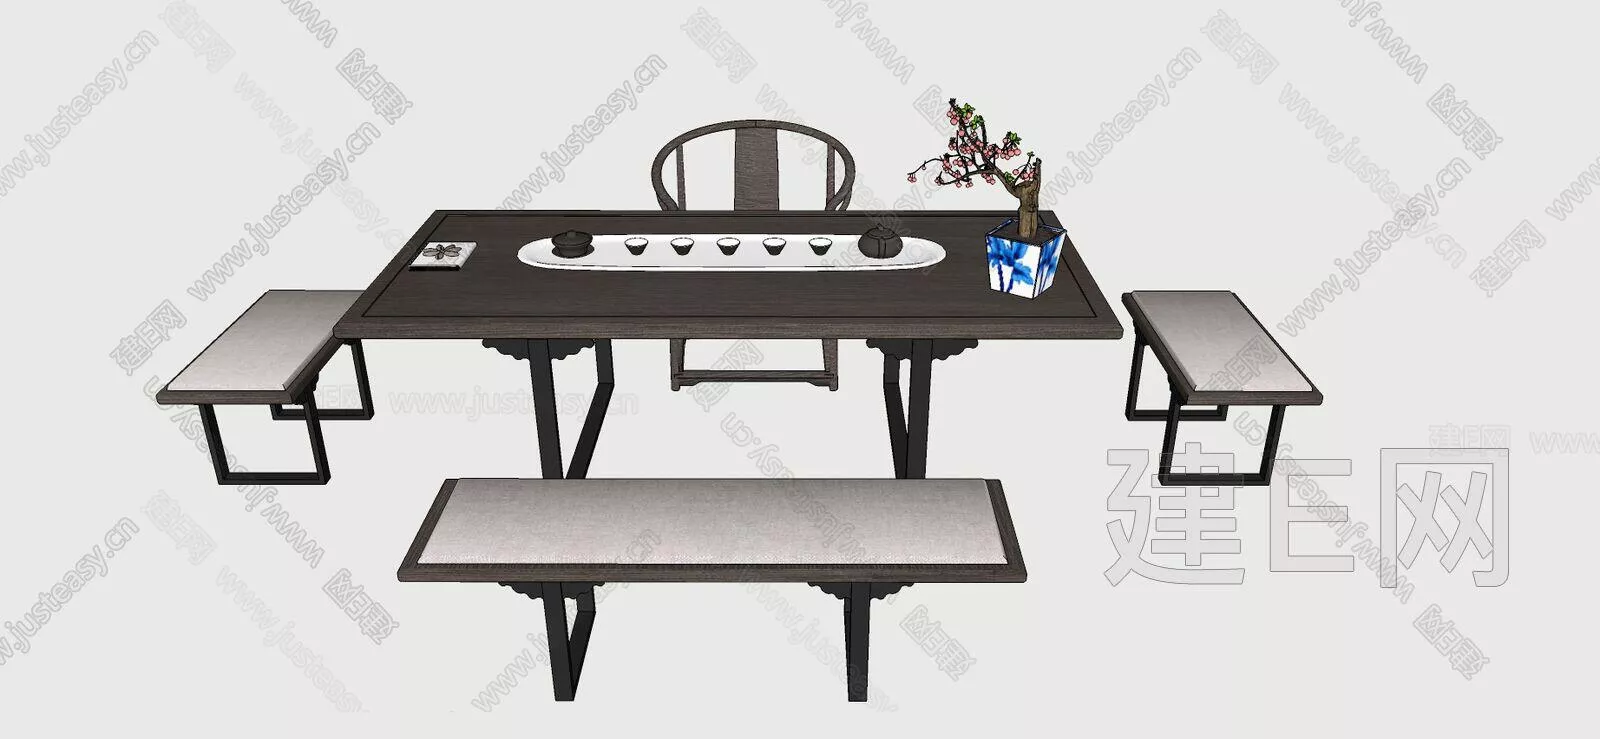 CHINESE TEA TABLE SET - SKETCHUP 3D MODEL - ENSCAPE - 111427915